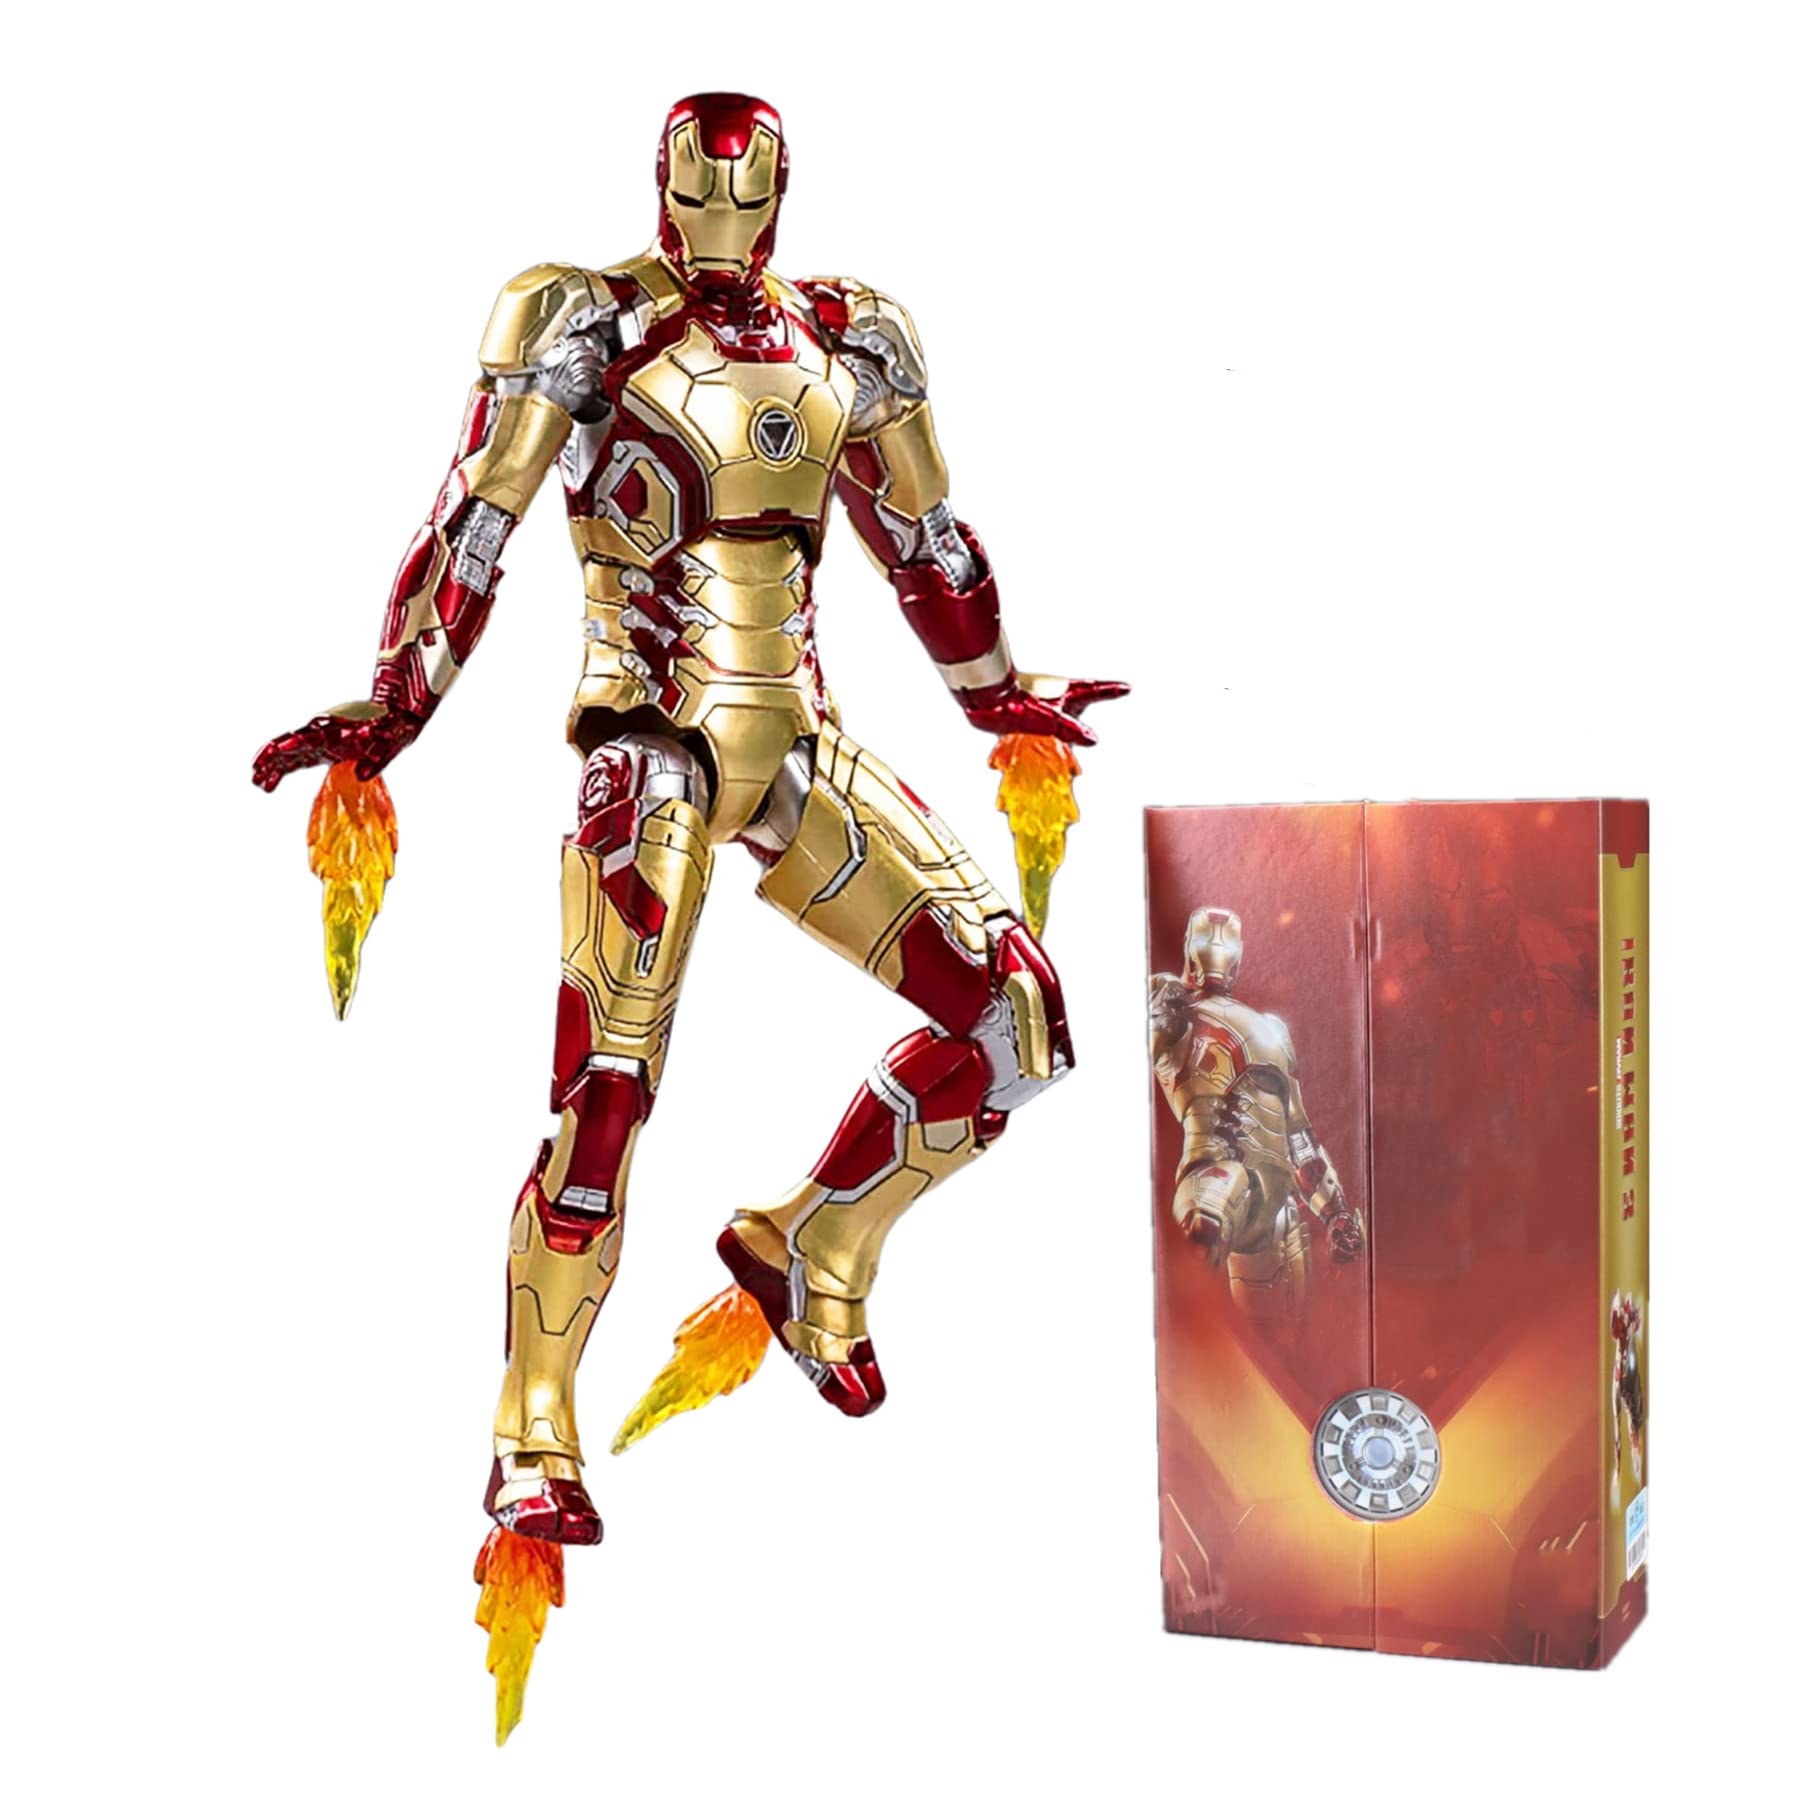 Figura de Iron man